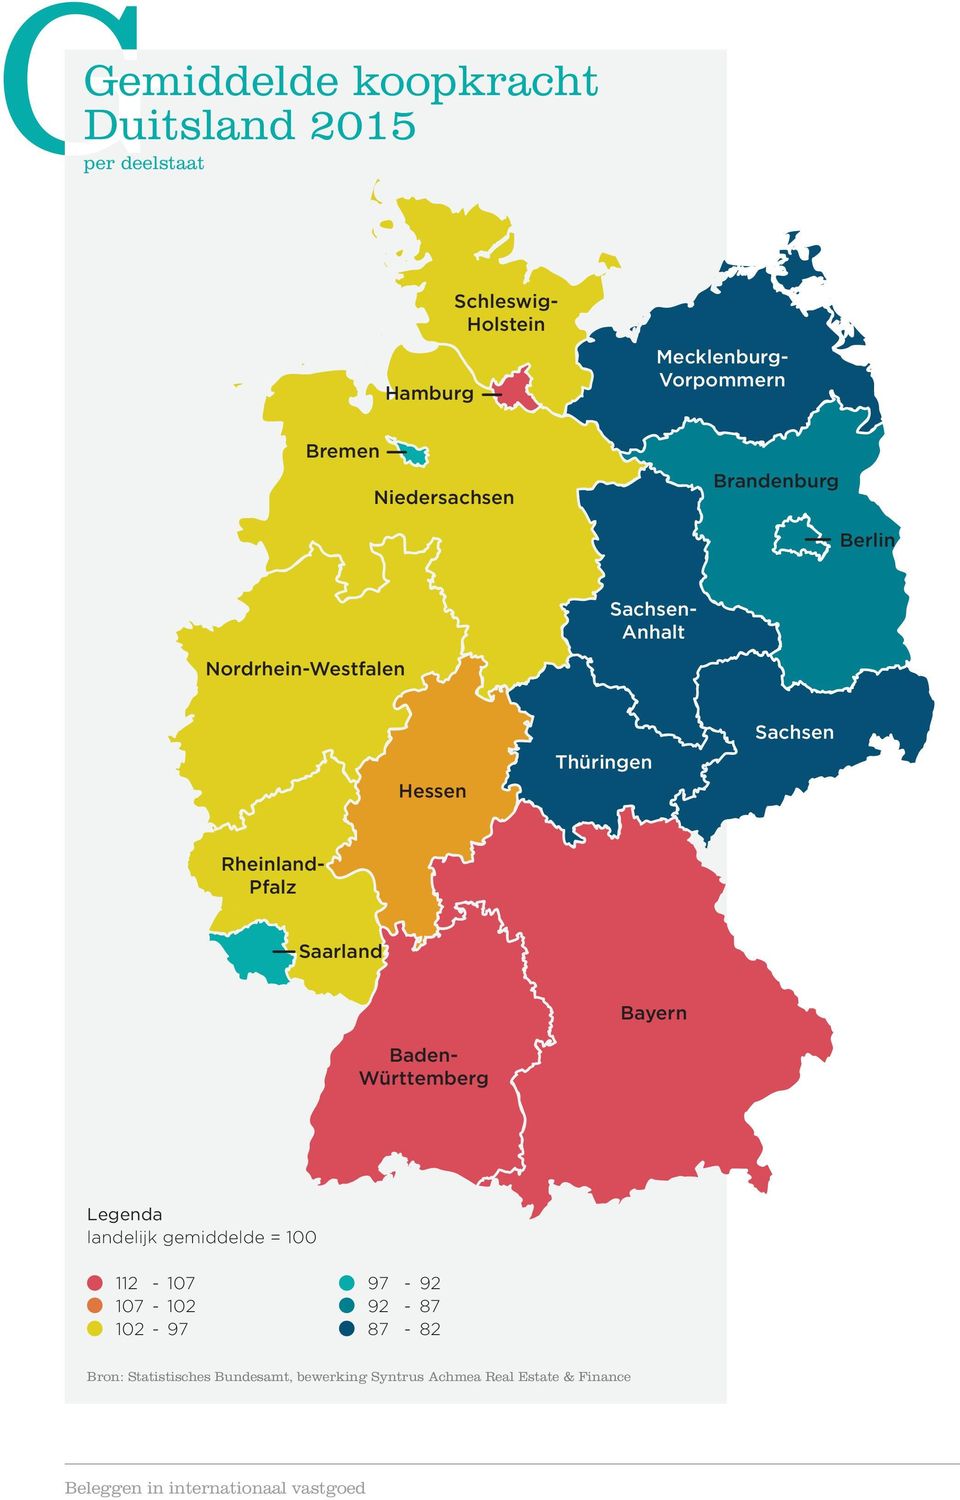 Rheinland- Pfalz Saarland Baden- Württemberg Bayern Legenda landelijk gemiddelde = 100 112-107 107-102